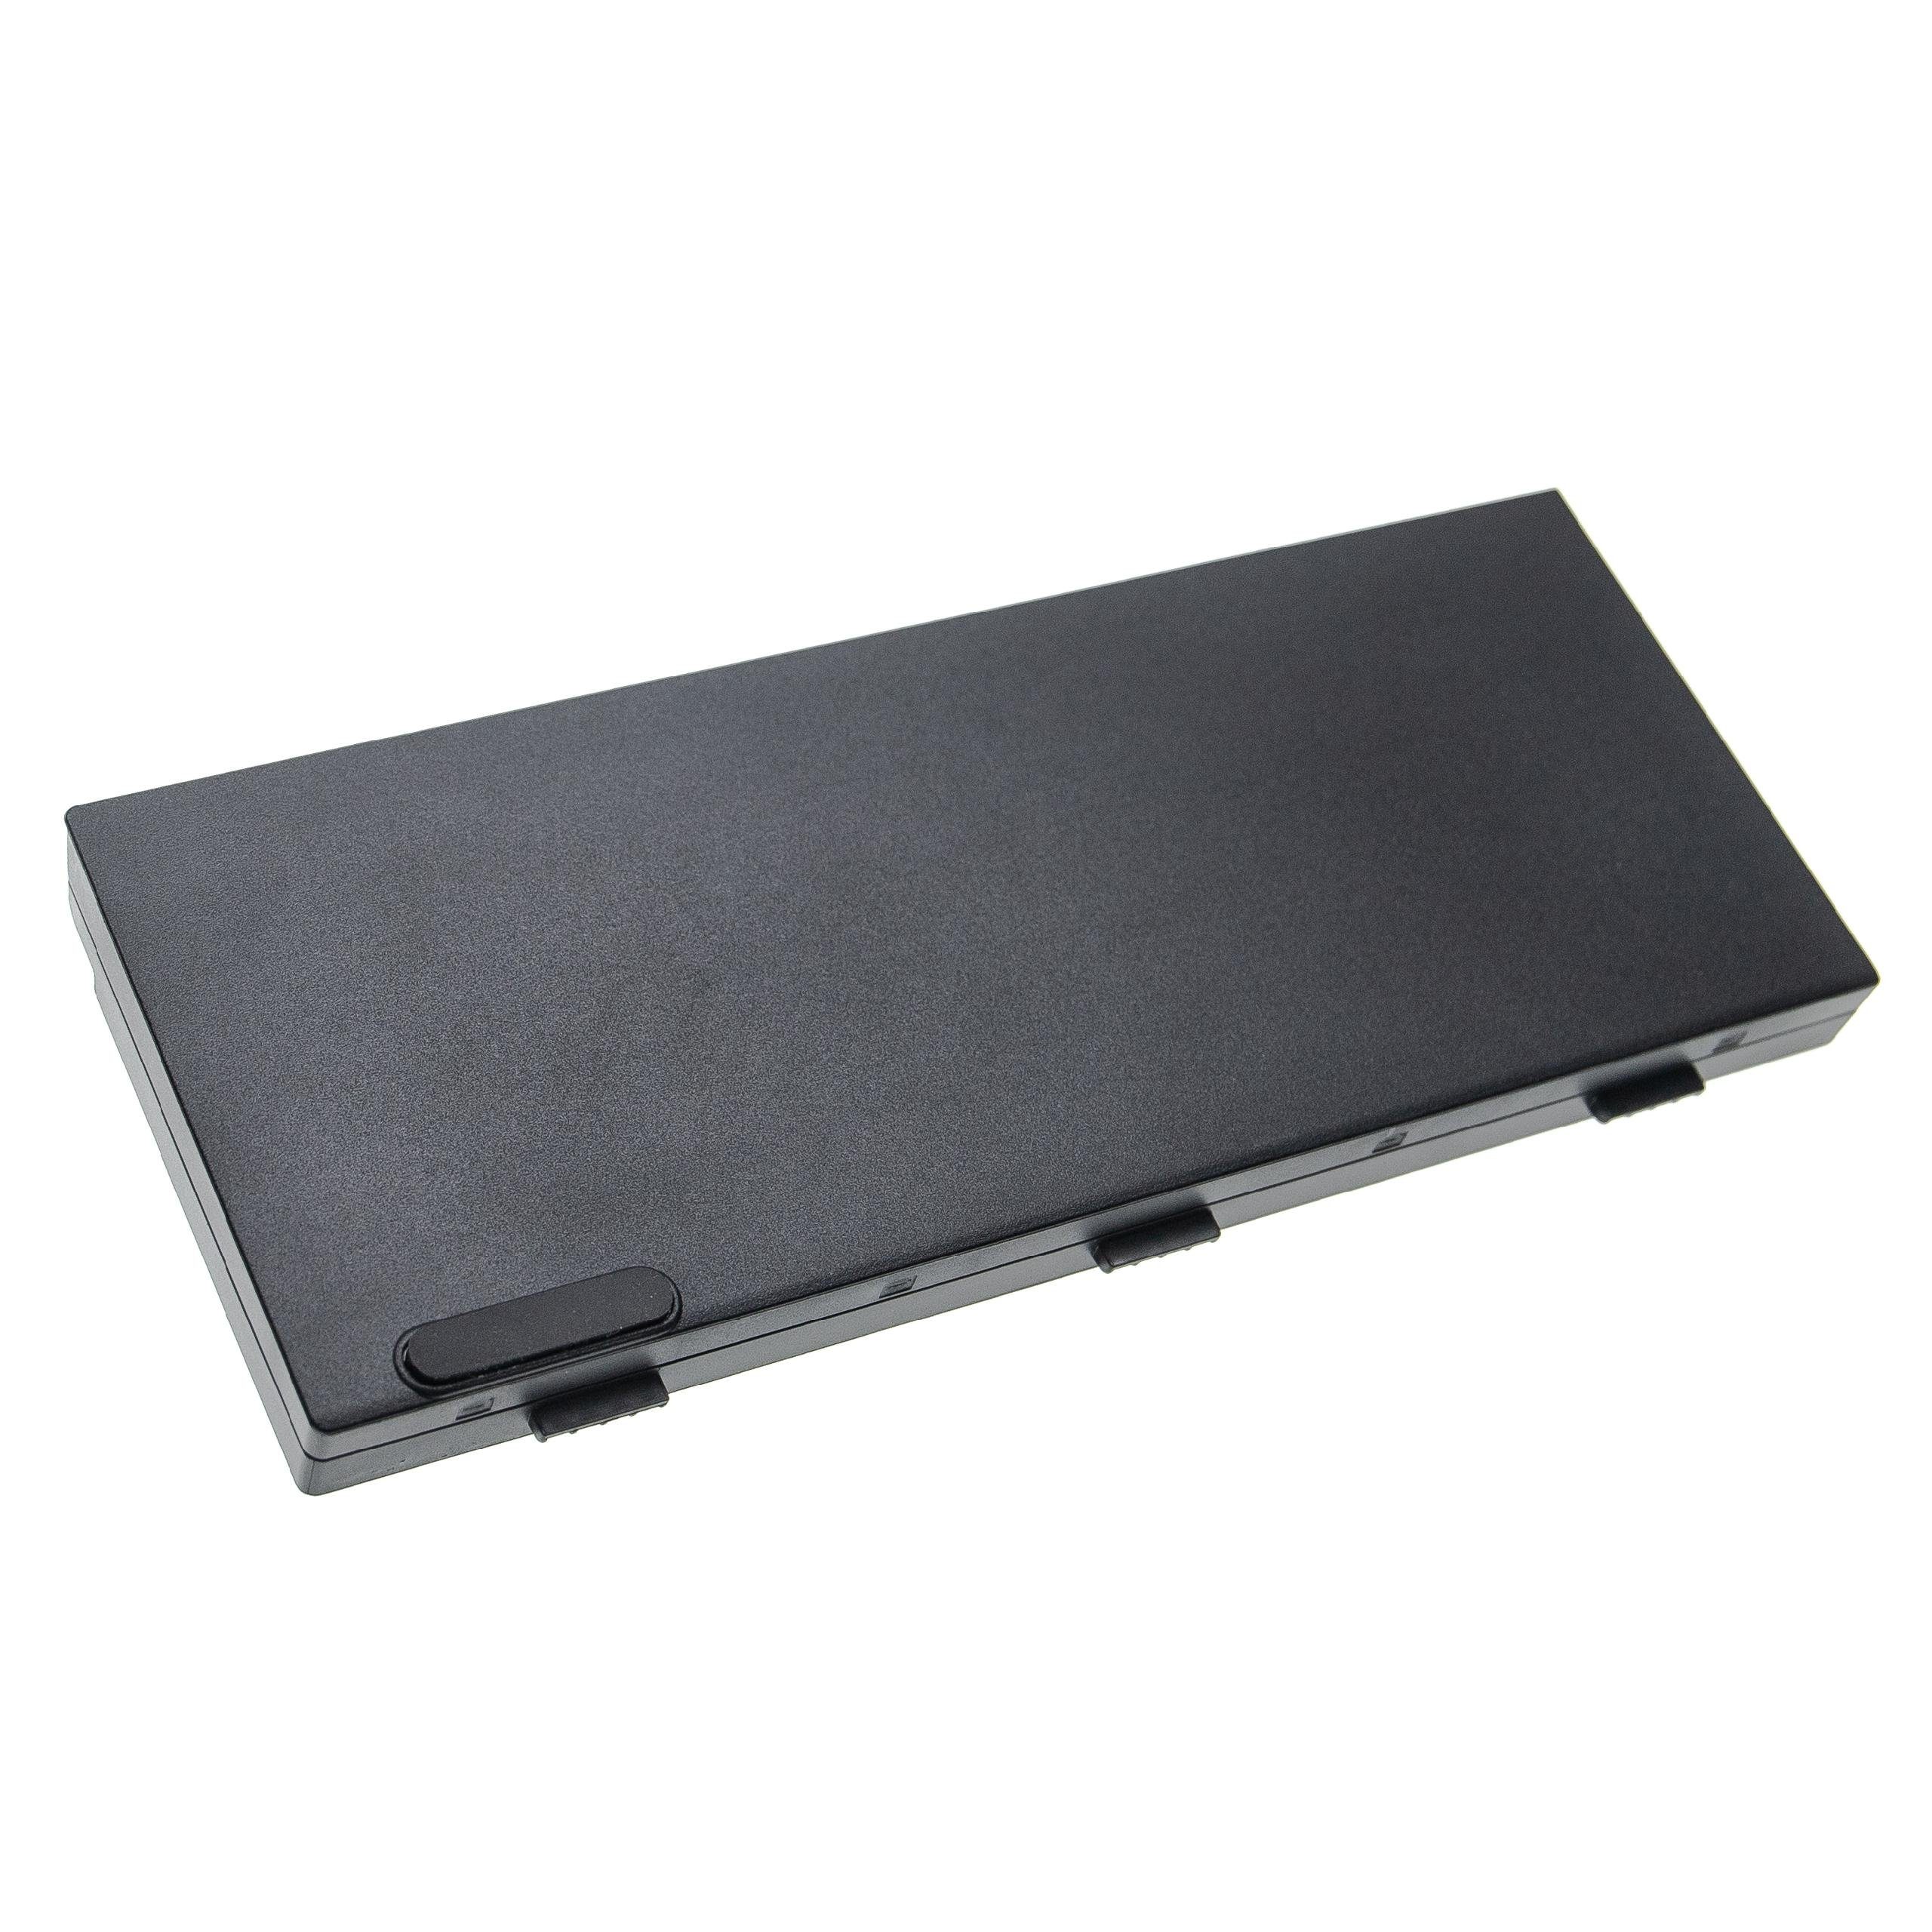 Laptop-Akku P51 ThinkPad 20HHA005CD, passend mAh 20HHA00QCD, für P51 P51 vhbw 4200 Lenovo